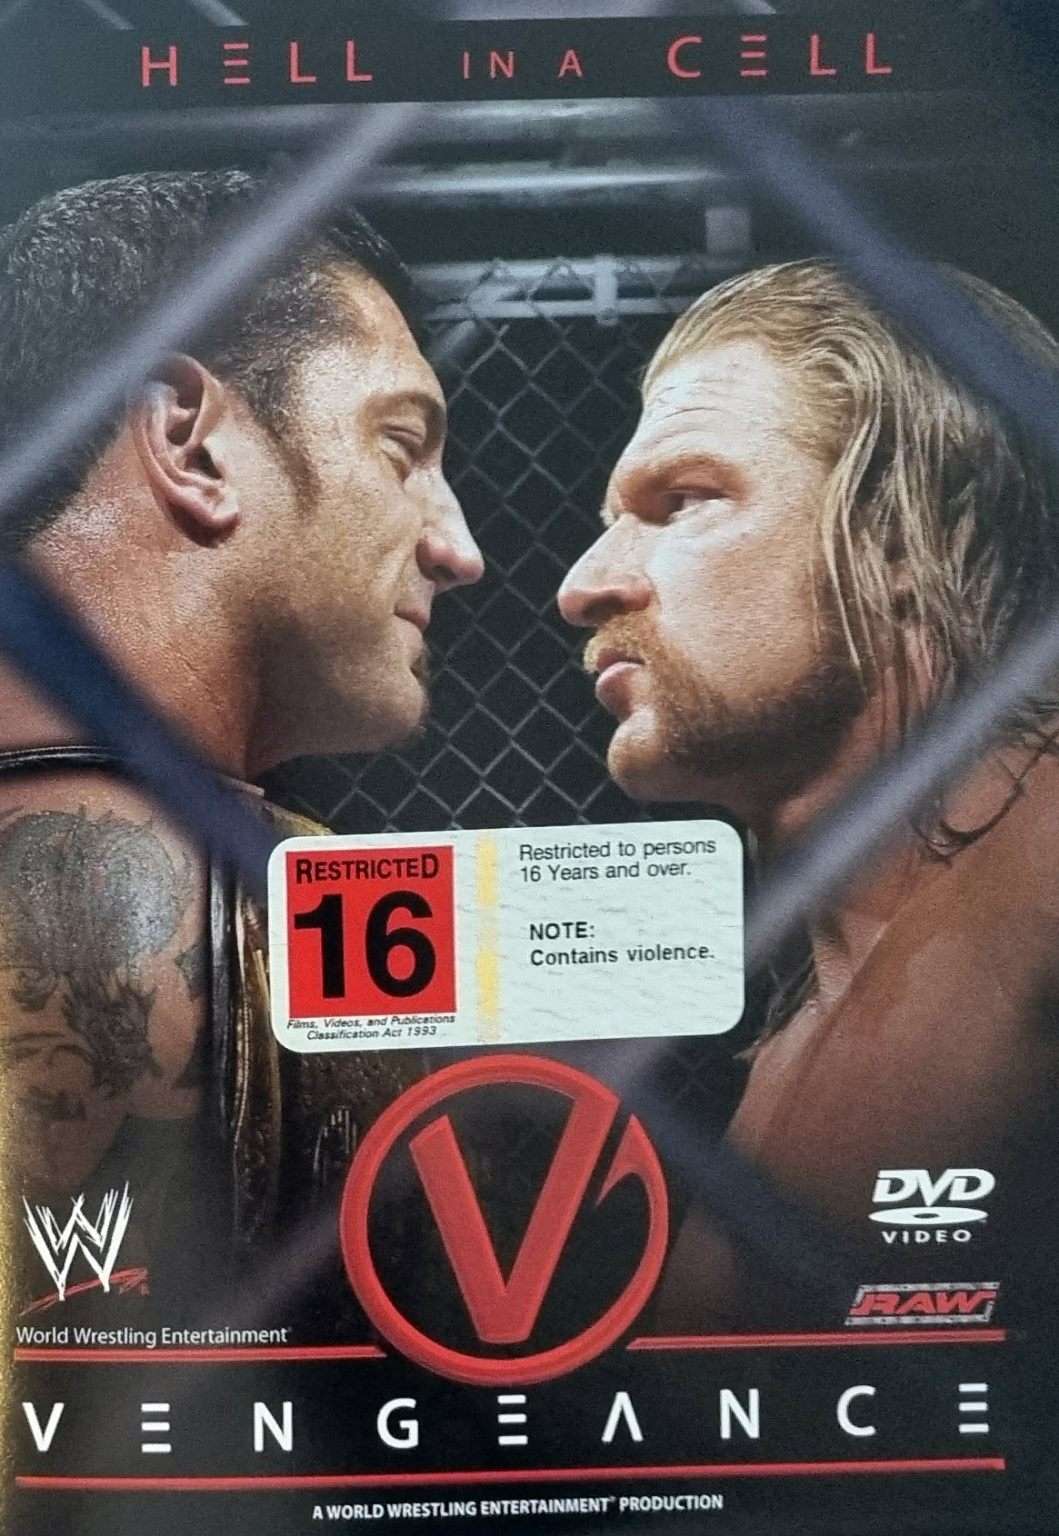 WWE: Vengeance 2005